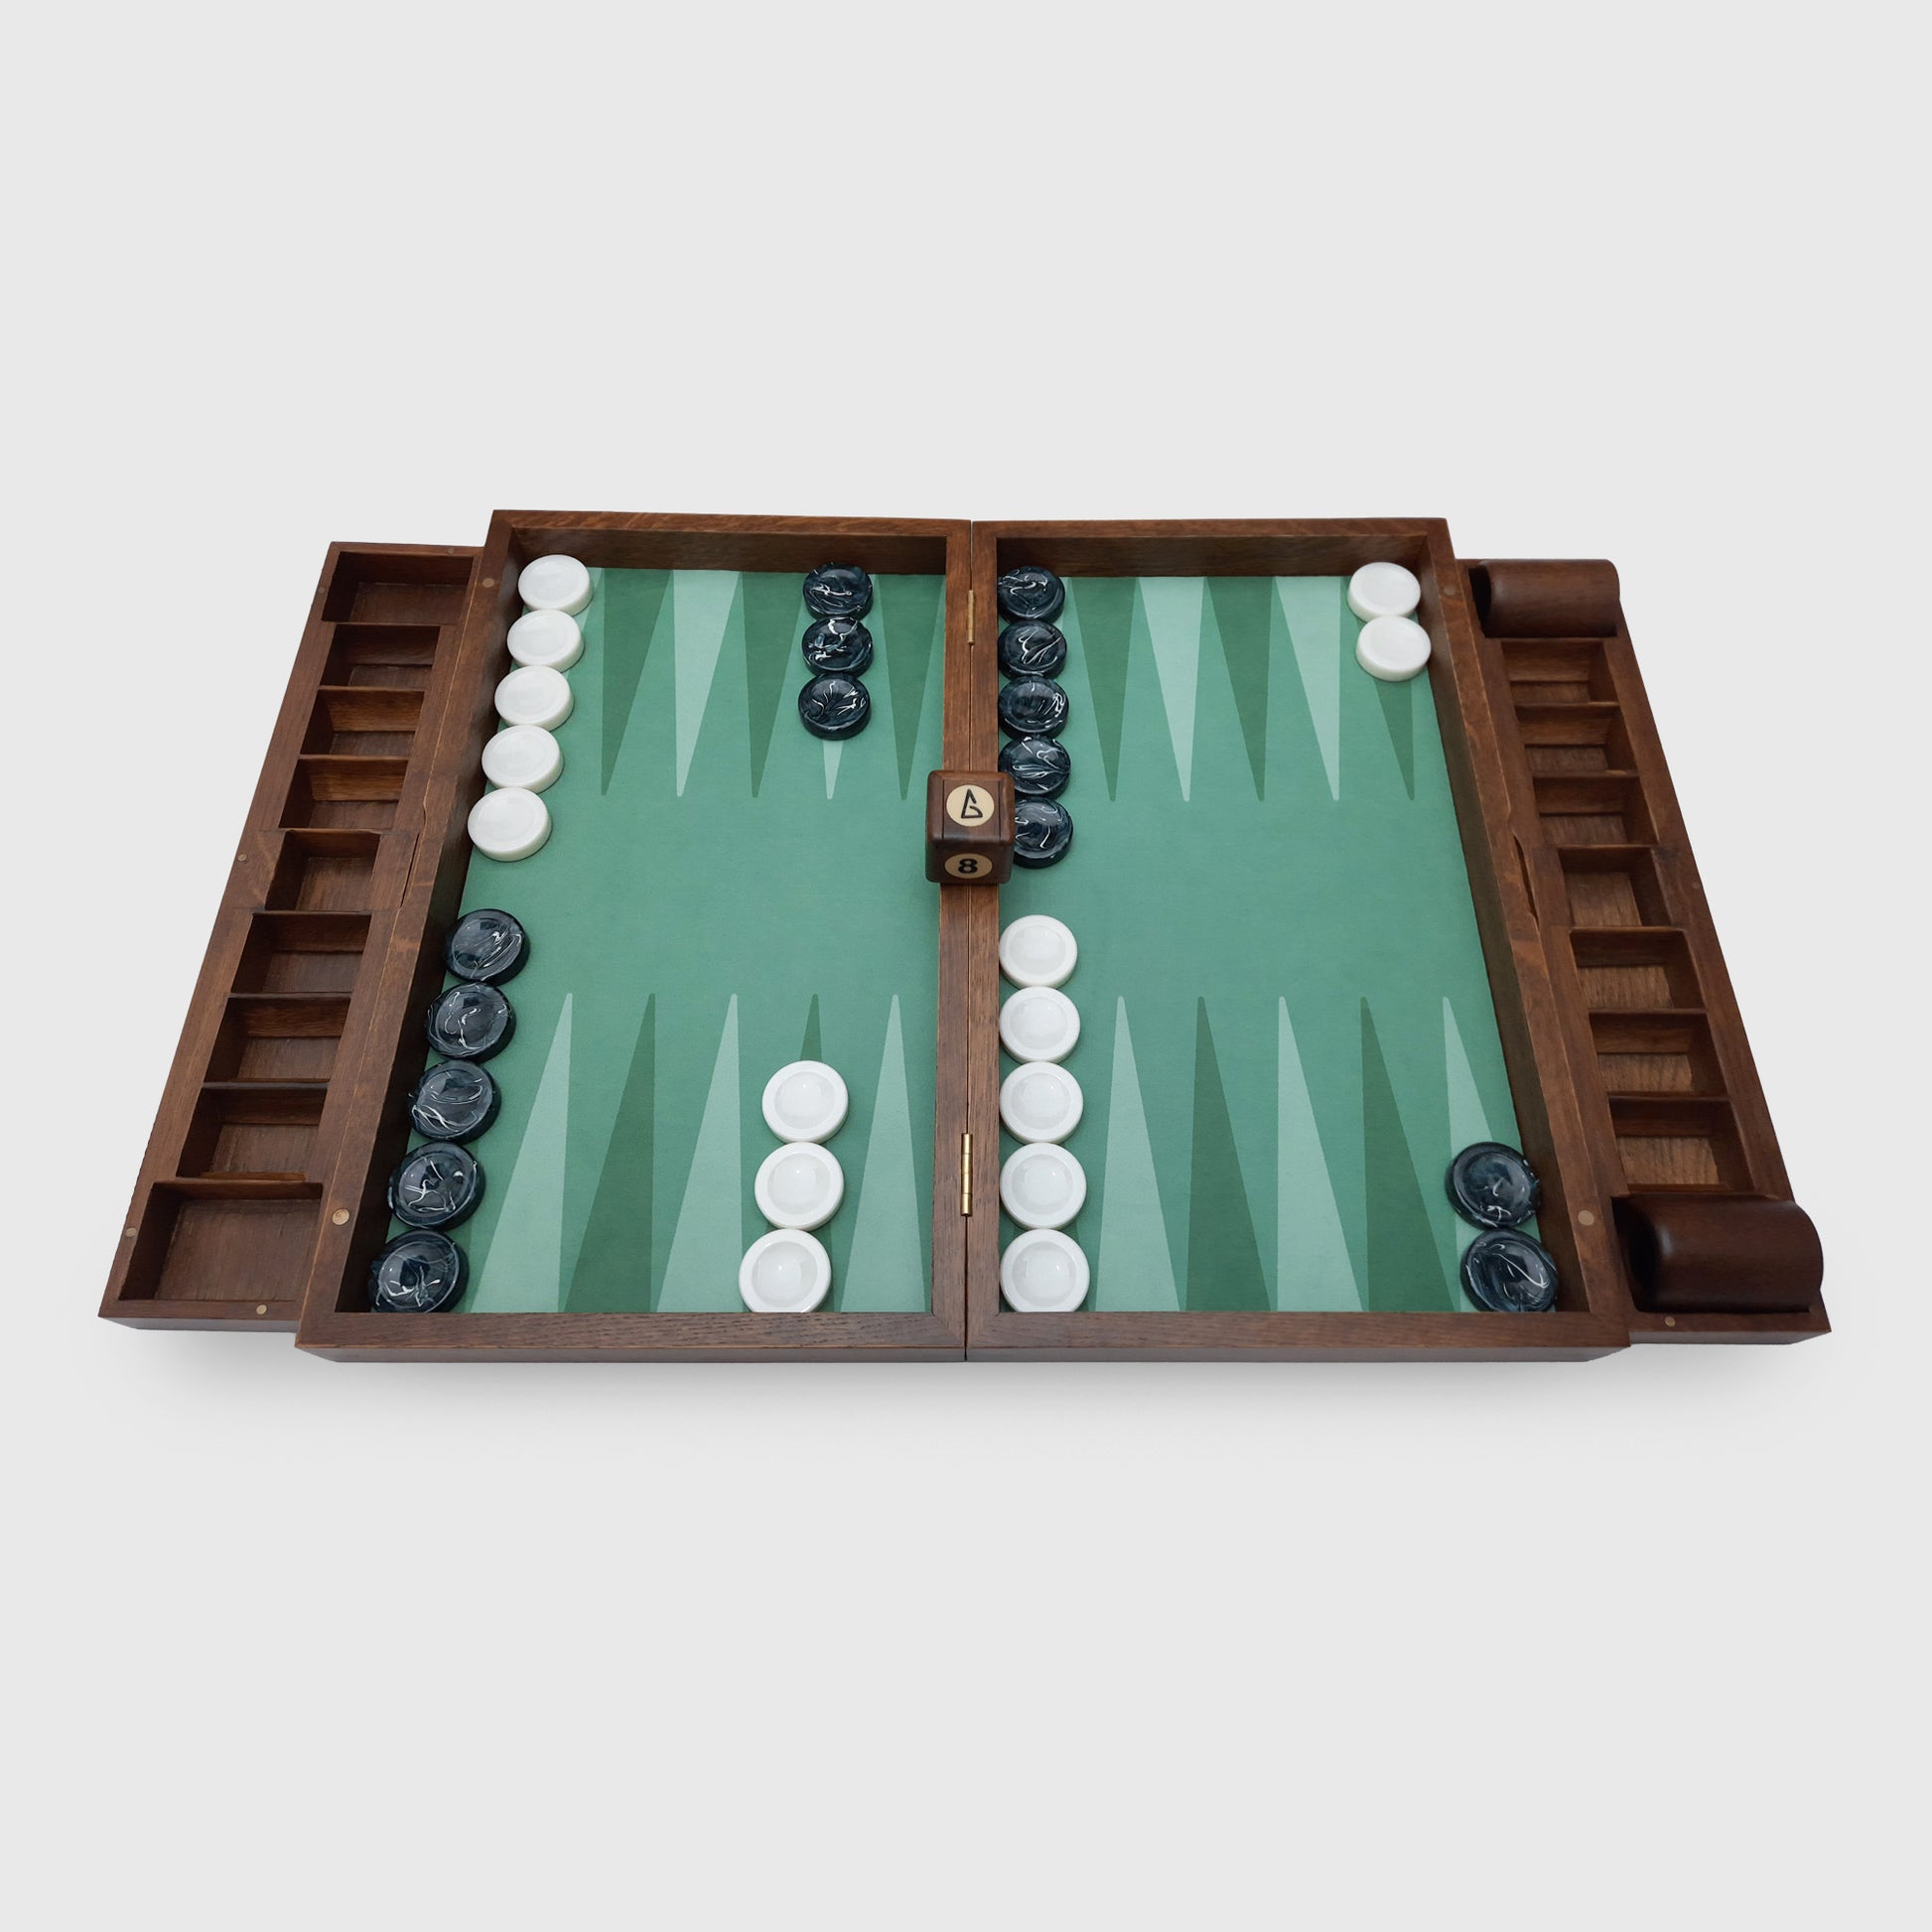 Luxury Backgammon Set, The Earth | Innovative | Eco-friendly – Backgammon